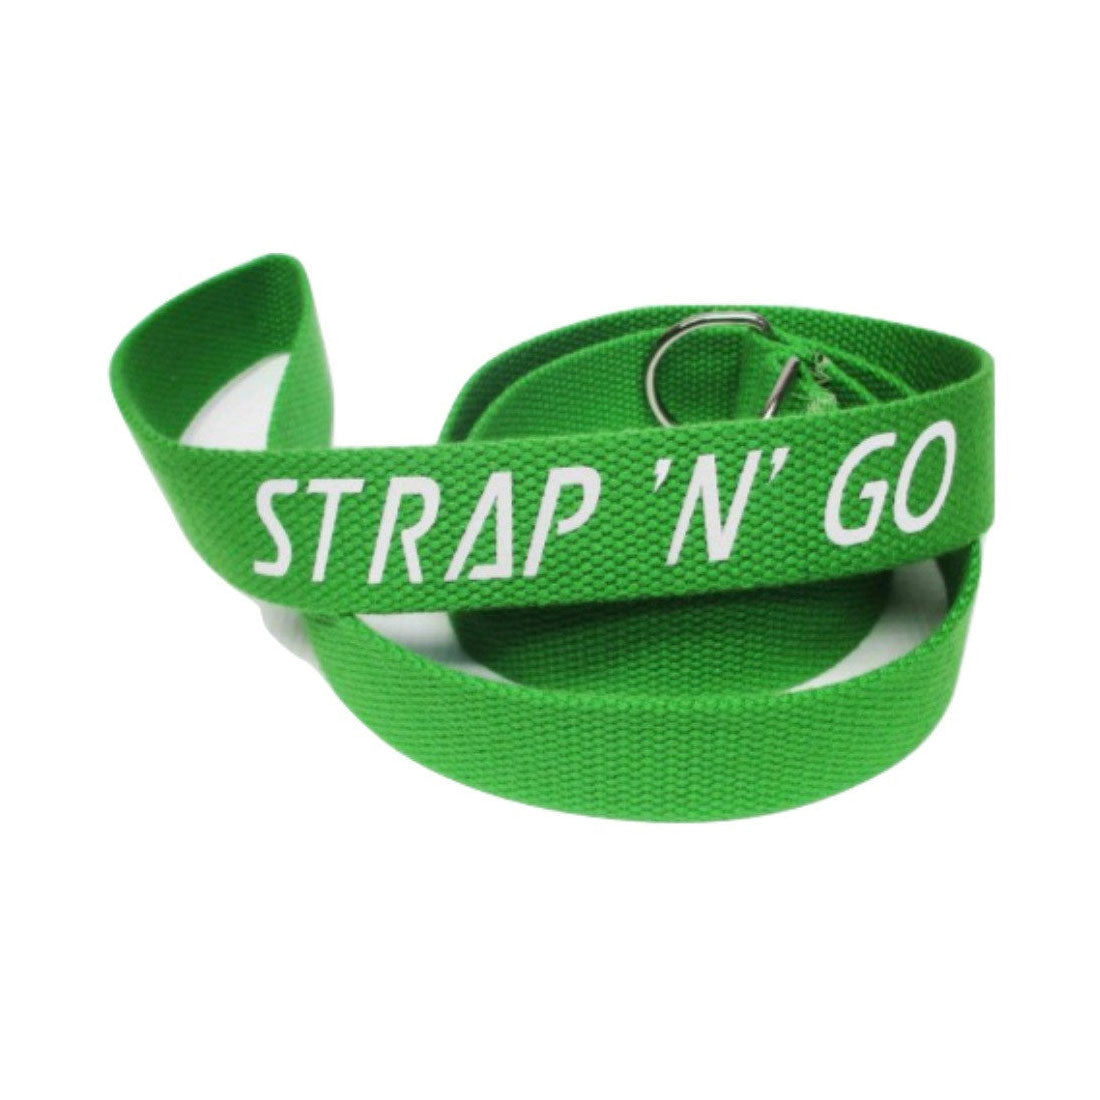 Strap N Go Skate Noose/Leash - Solid Colours Green Roller Skate Accessories